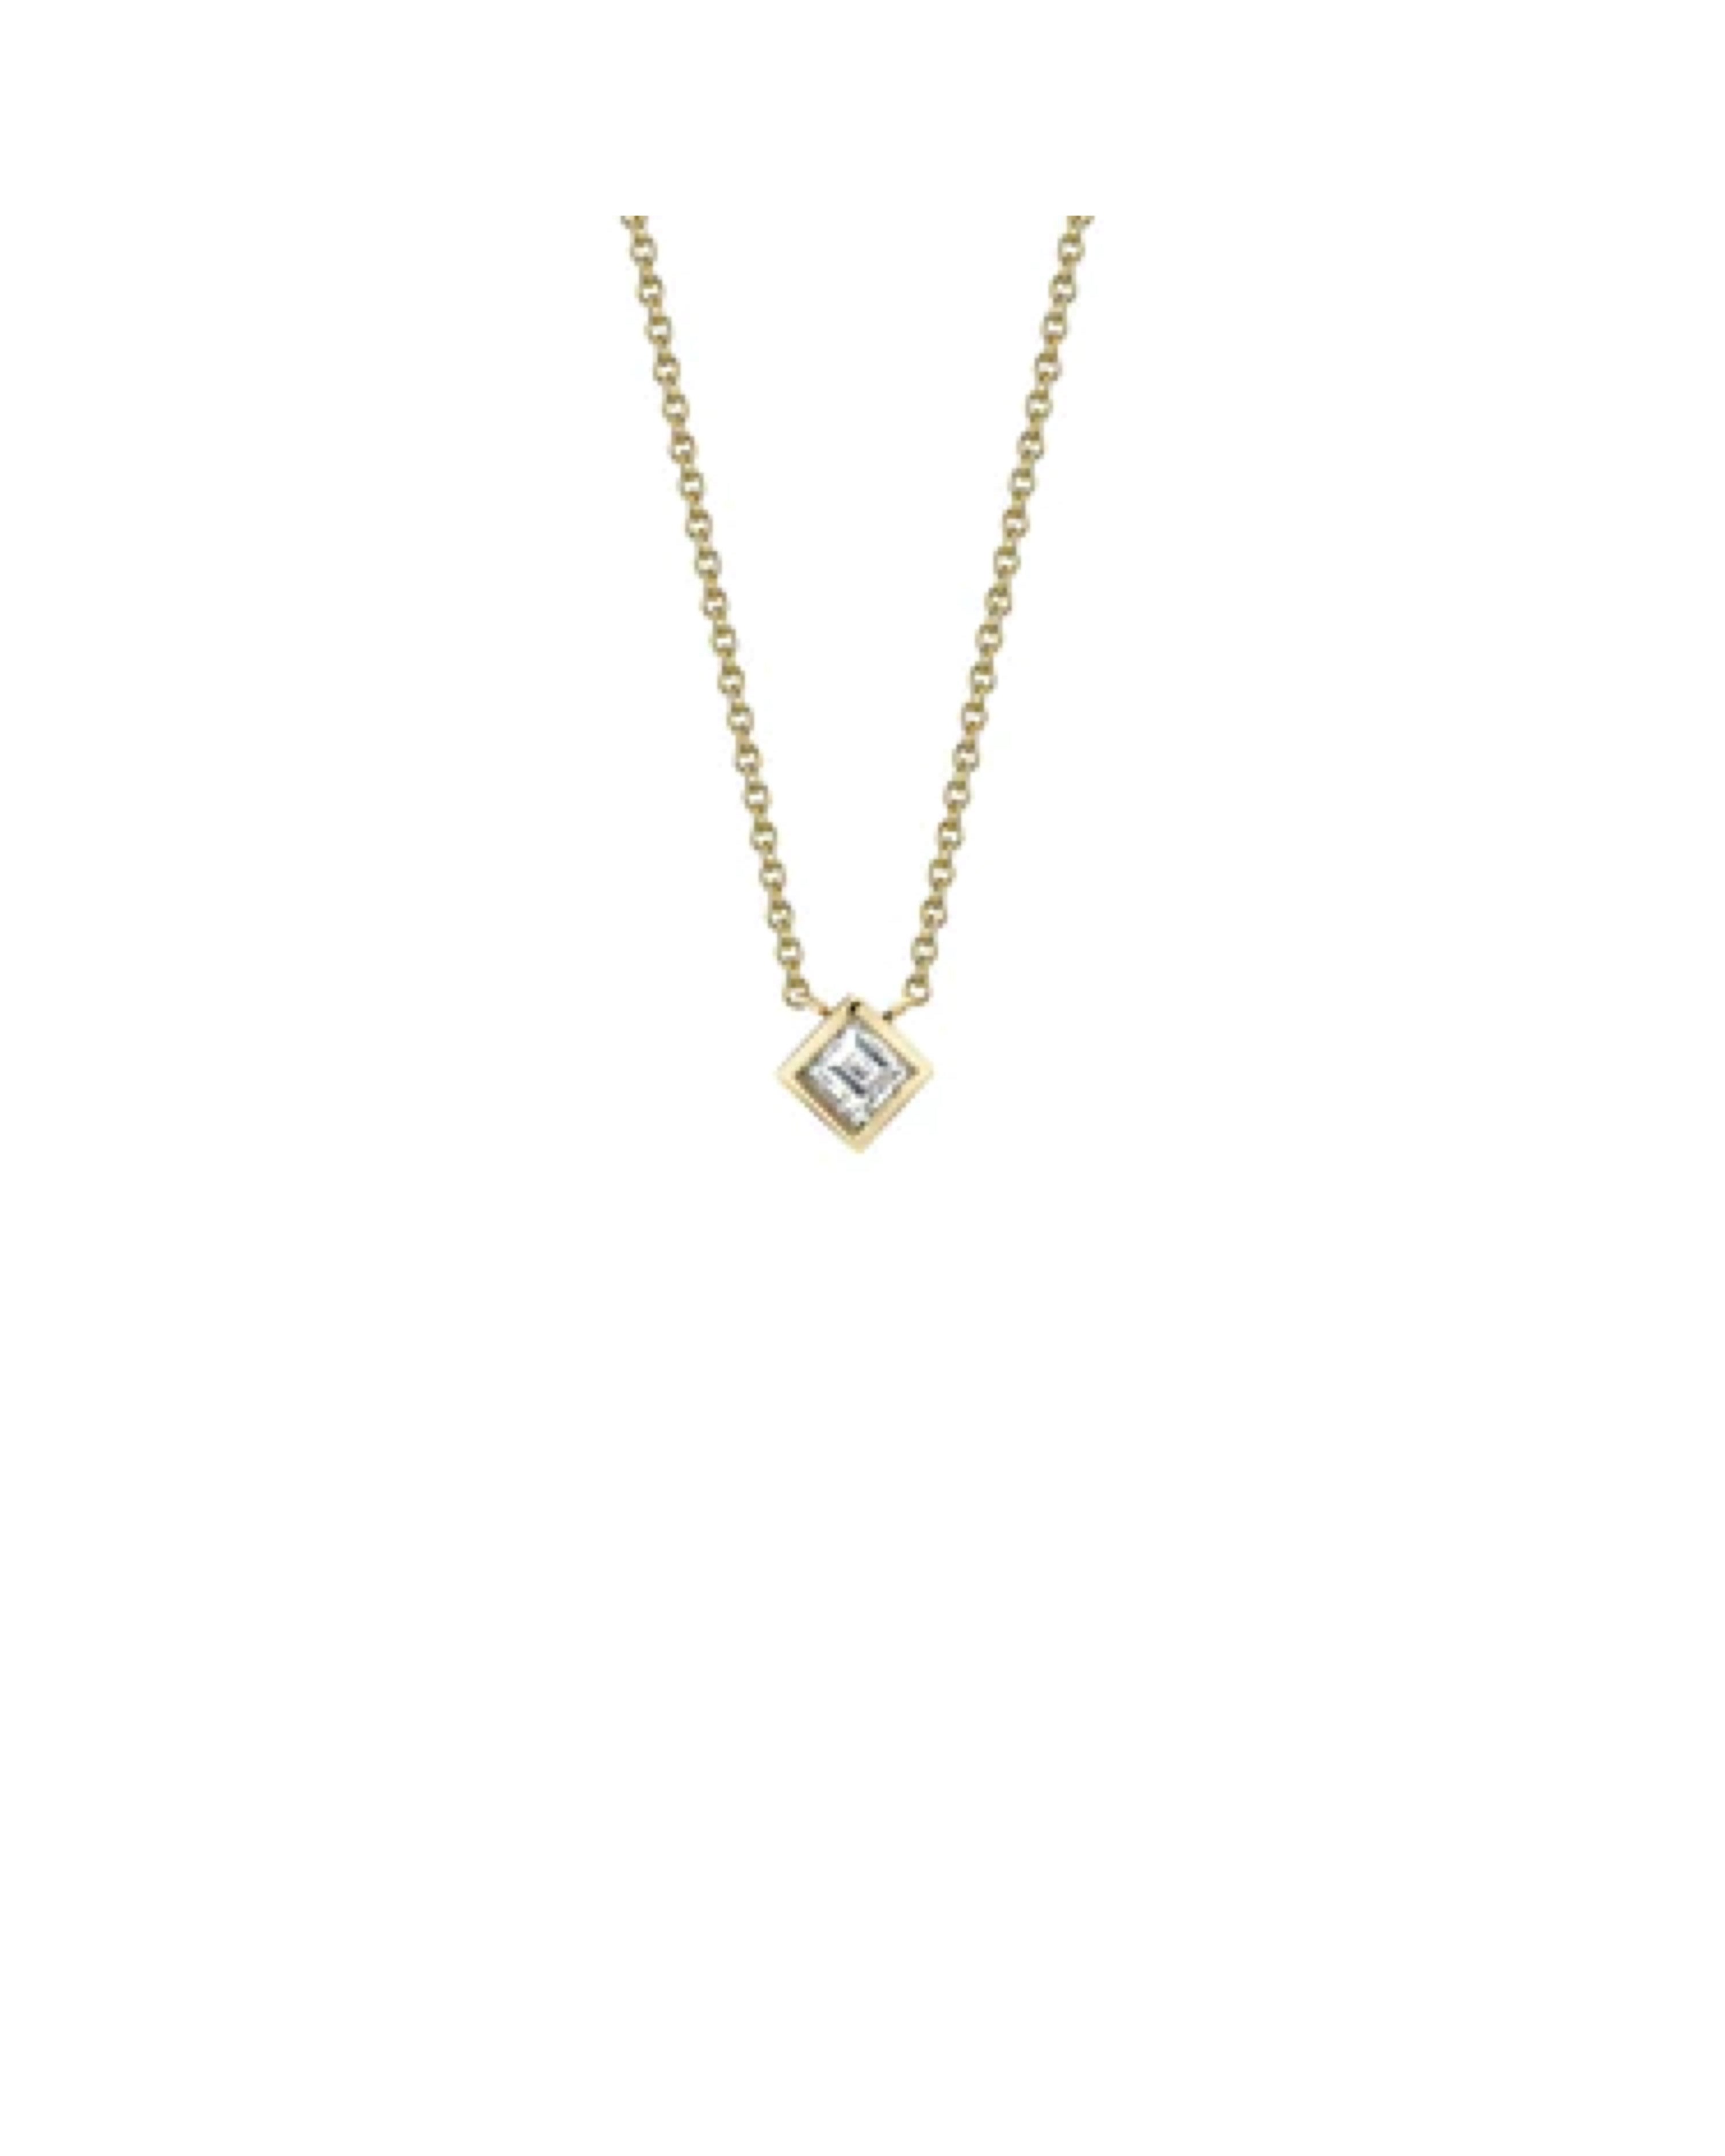 MINI CARRE DIAMOND BEZEL SOLITAIRE NECKLACE - YELLOW GOLD